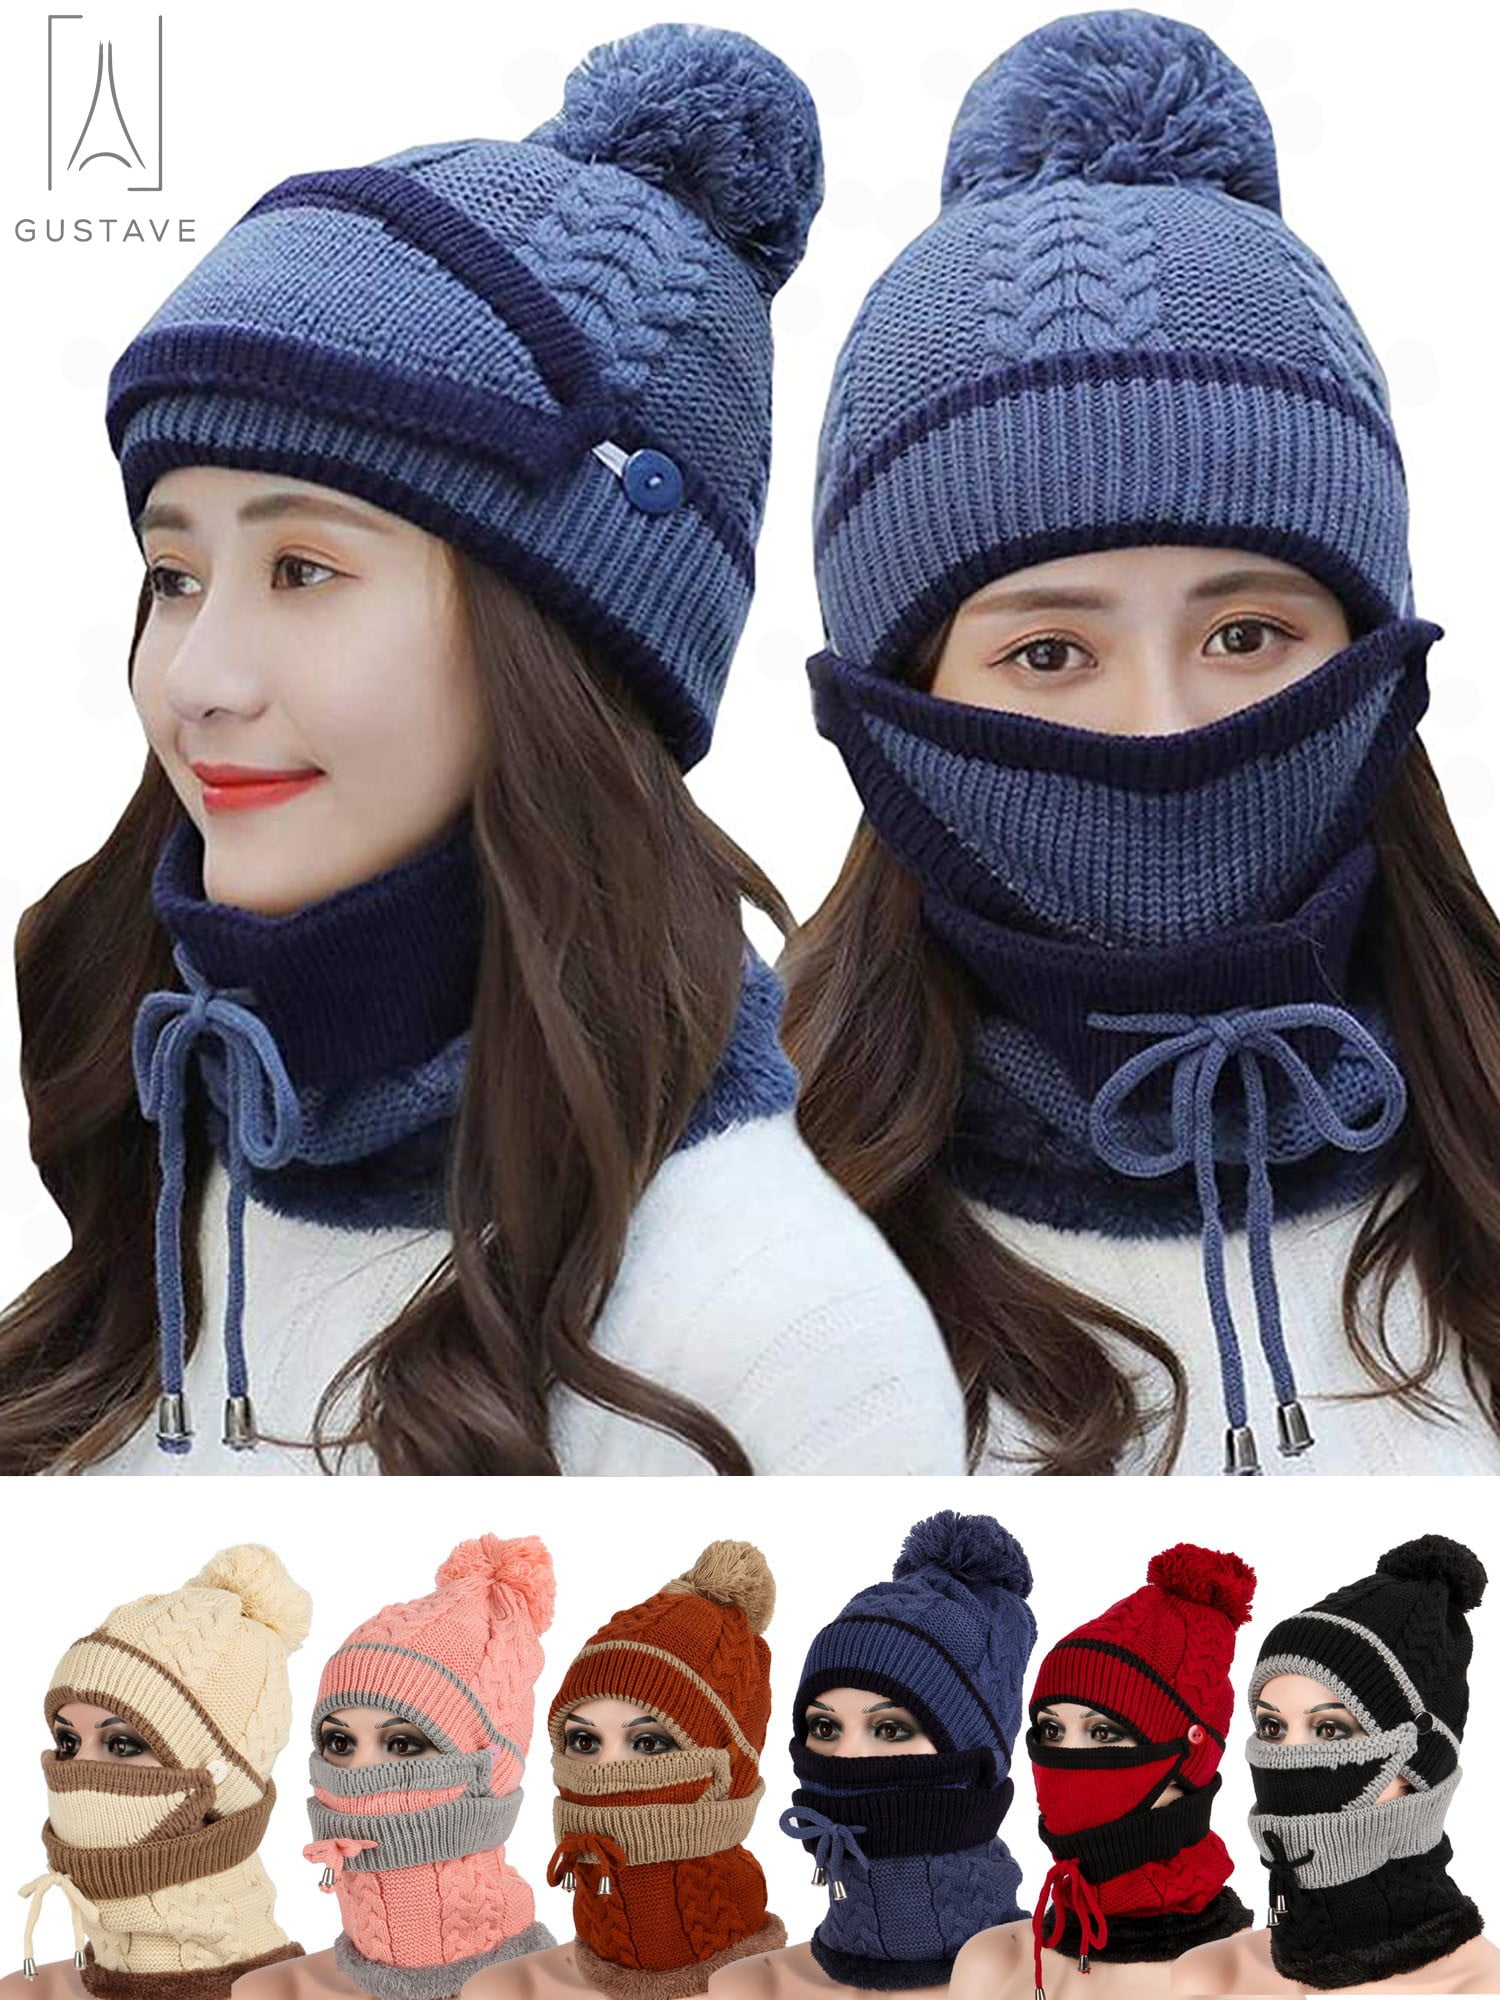 FZ FANTASTIC ZONE Kids Boys Girls Winter Warm Knit Beanie Hat Cap and Scarf Set with Fleece Lining 